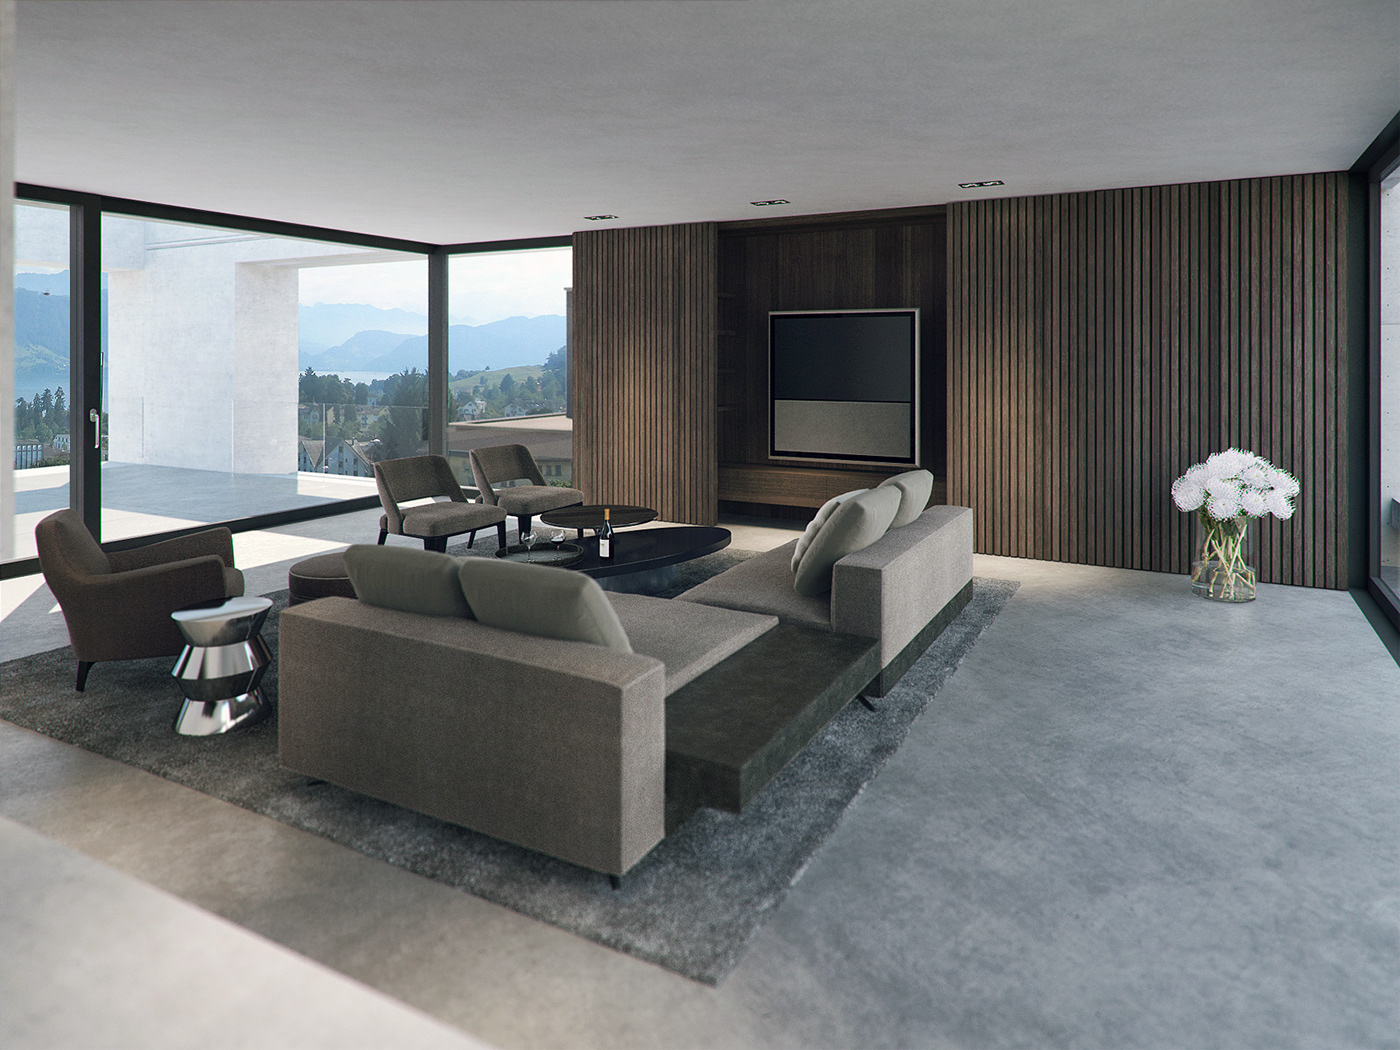 CG Render furniture Minotti luxury house Interior grey brown tv wood